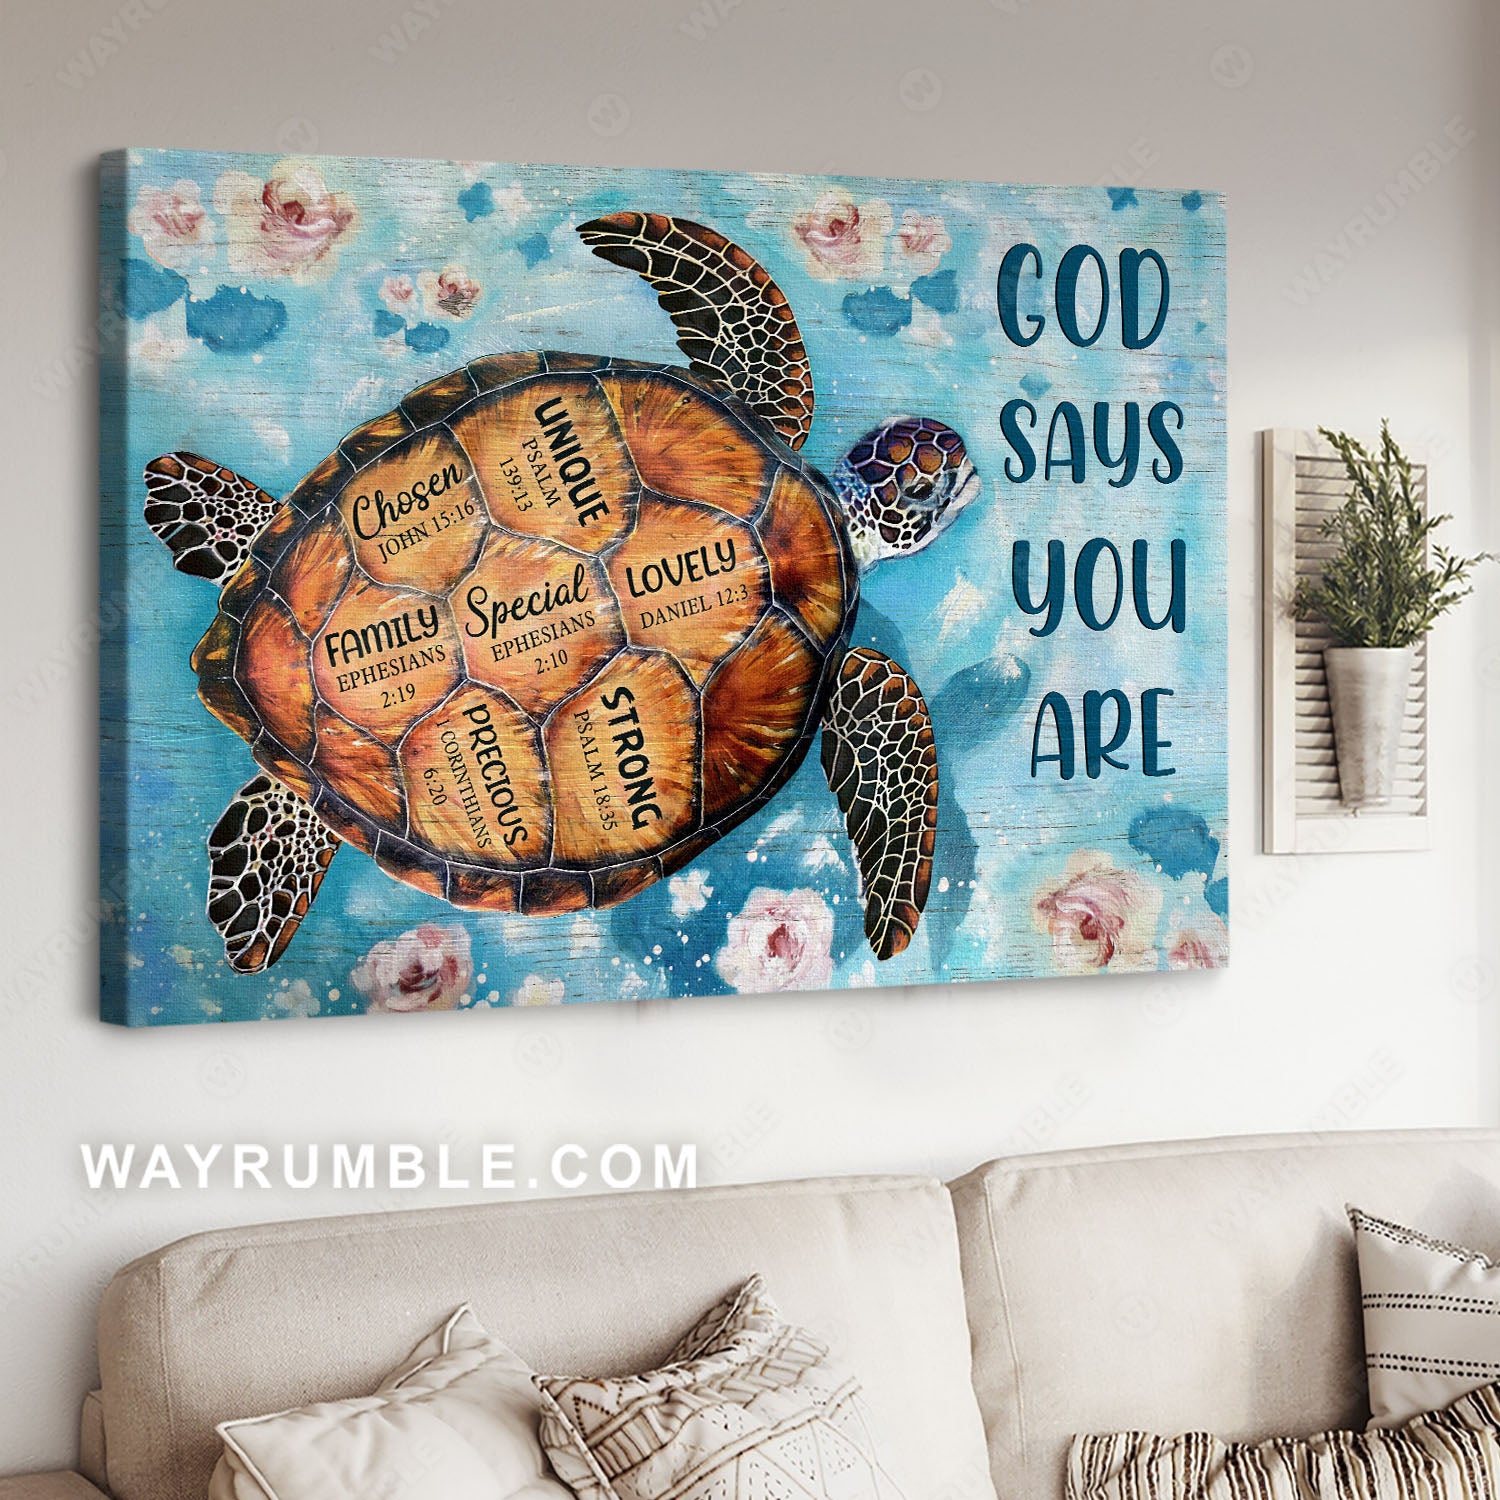 Seashell art, Types of seashell, Sea turtle, God says you are lovely - -  Wayrumble